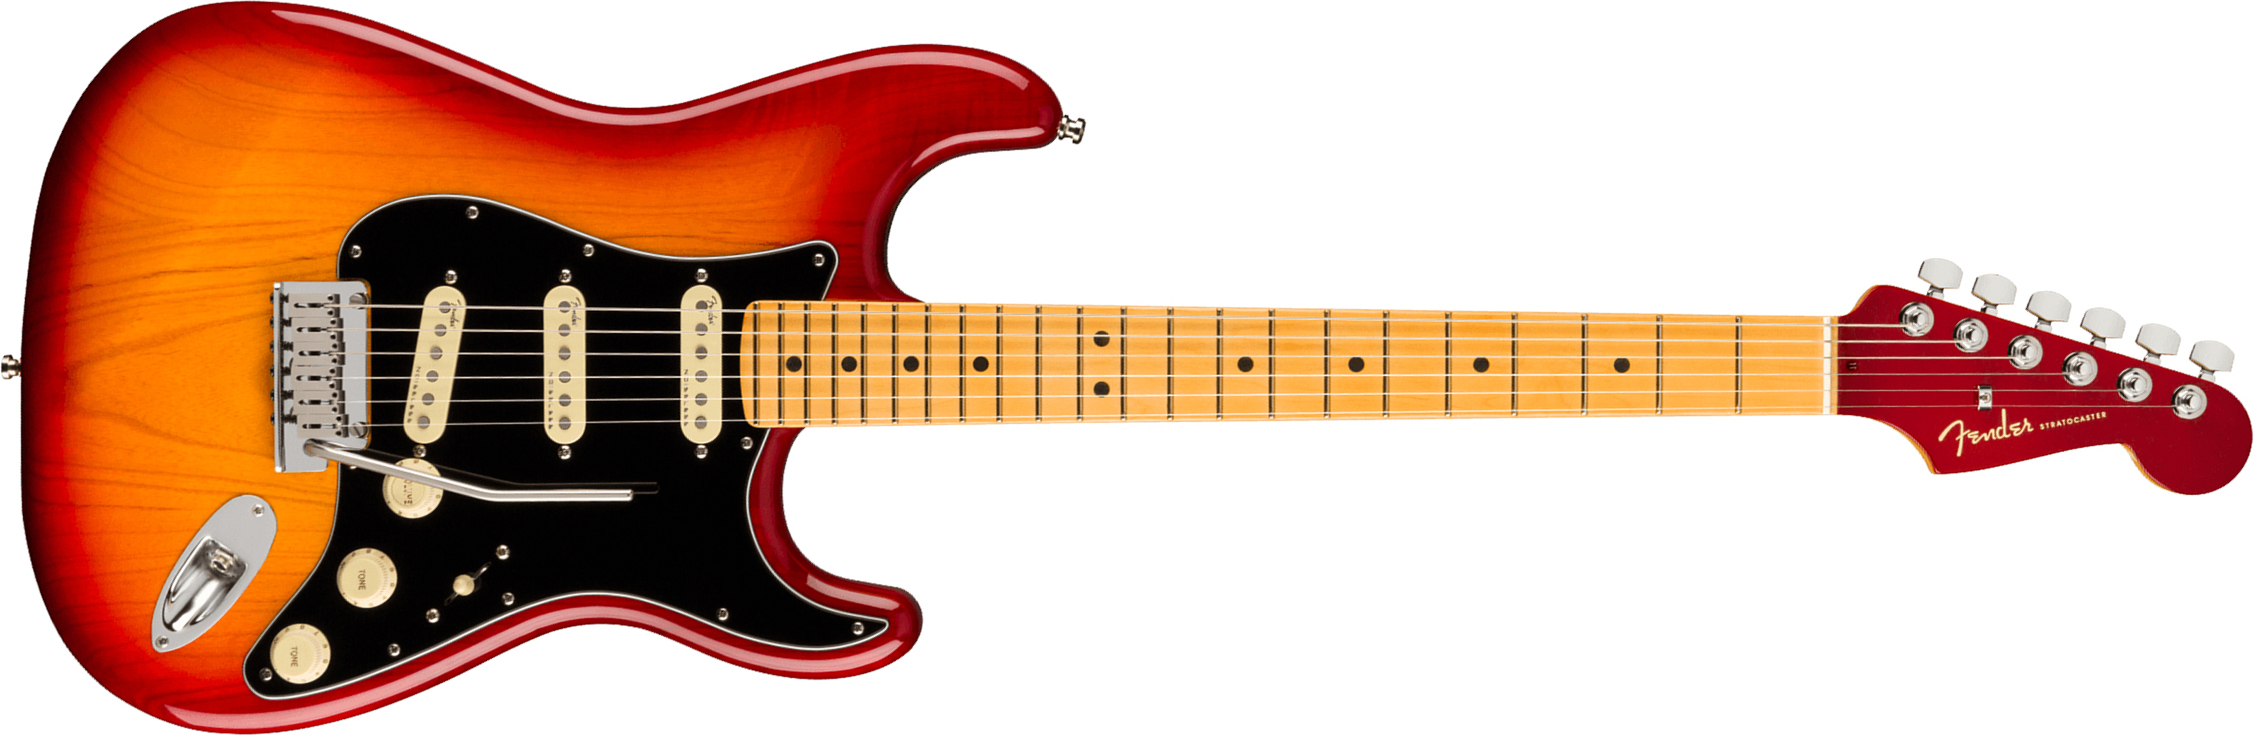 Fender Strat American Ultra Luxe Usa Mn +etui - Plasma Red Burst - Guitare Électrique Forme Str - Main picture